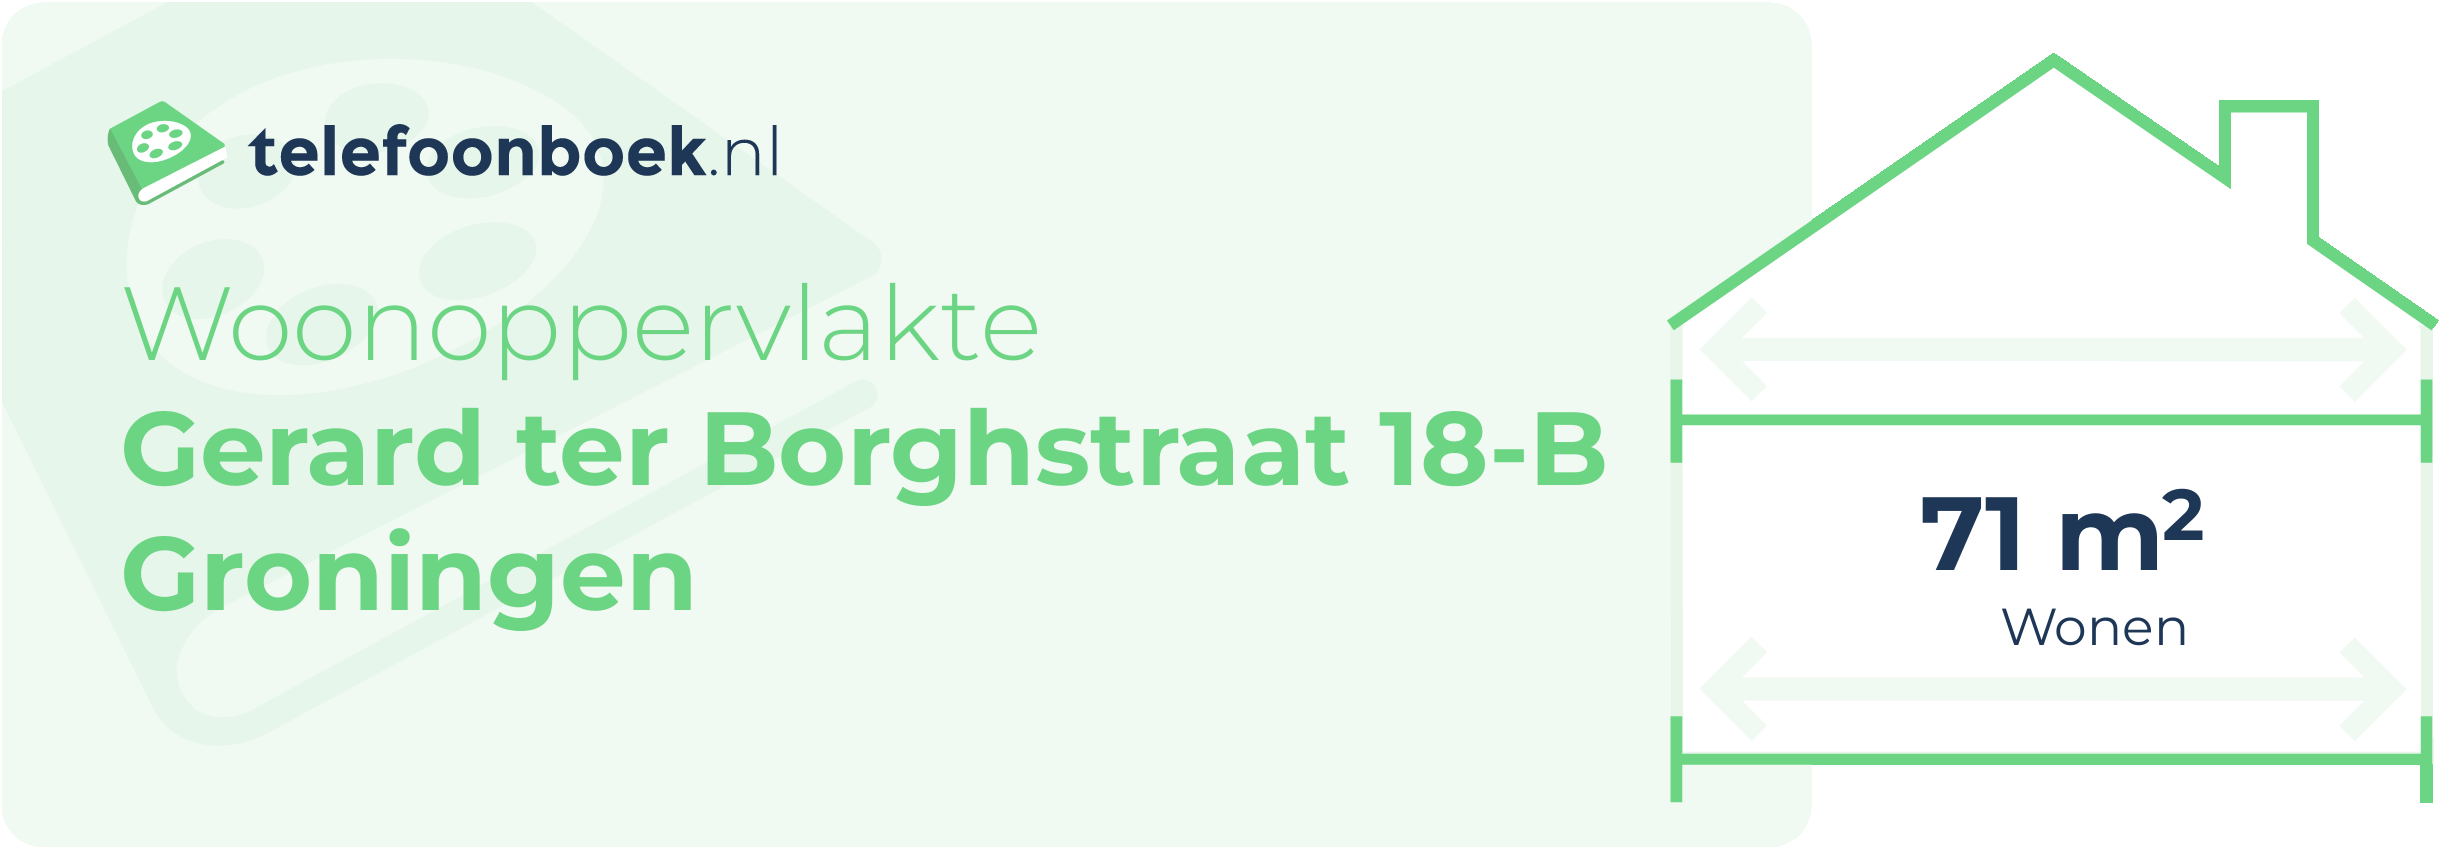 Woonoppervlakte Gerard Ter Borghstraat 18-B Groningen